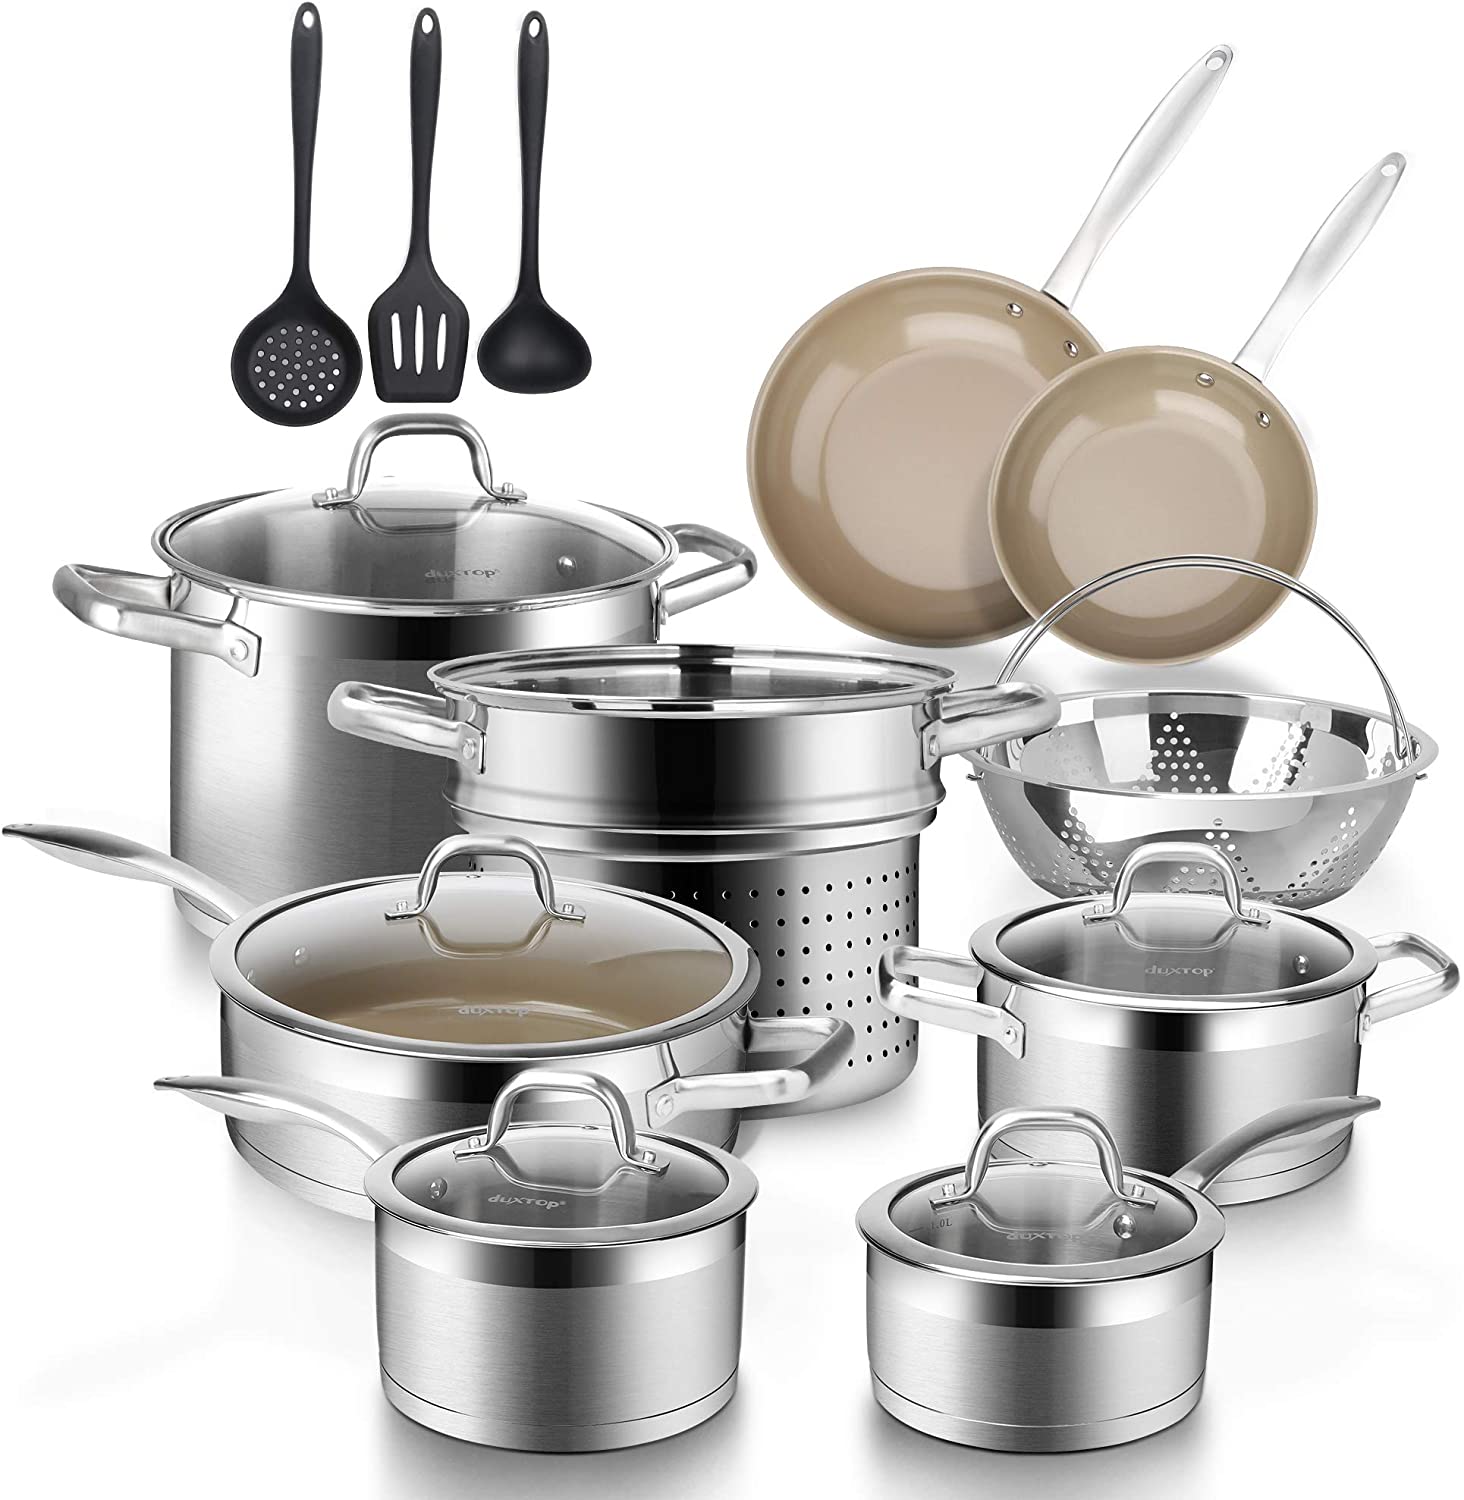 https://www.dontwasteyourmoney.com/wp-content/uploads/2020/10/duxtop-professional-stainless-steel-induction-cookware-set-17-piece-cookware-set.jpg